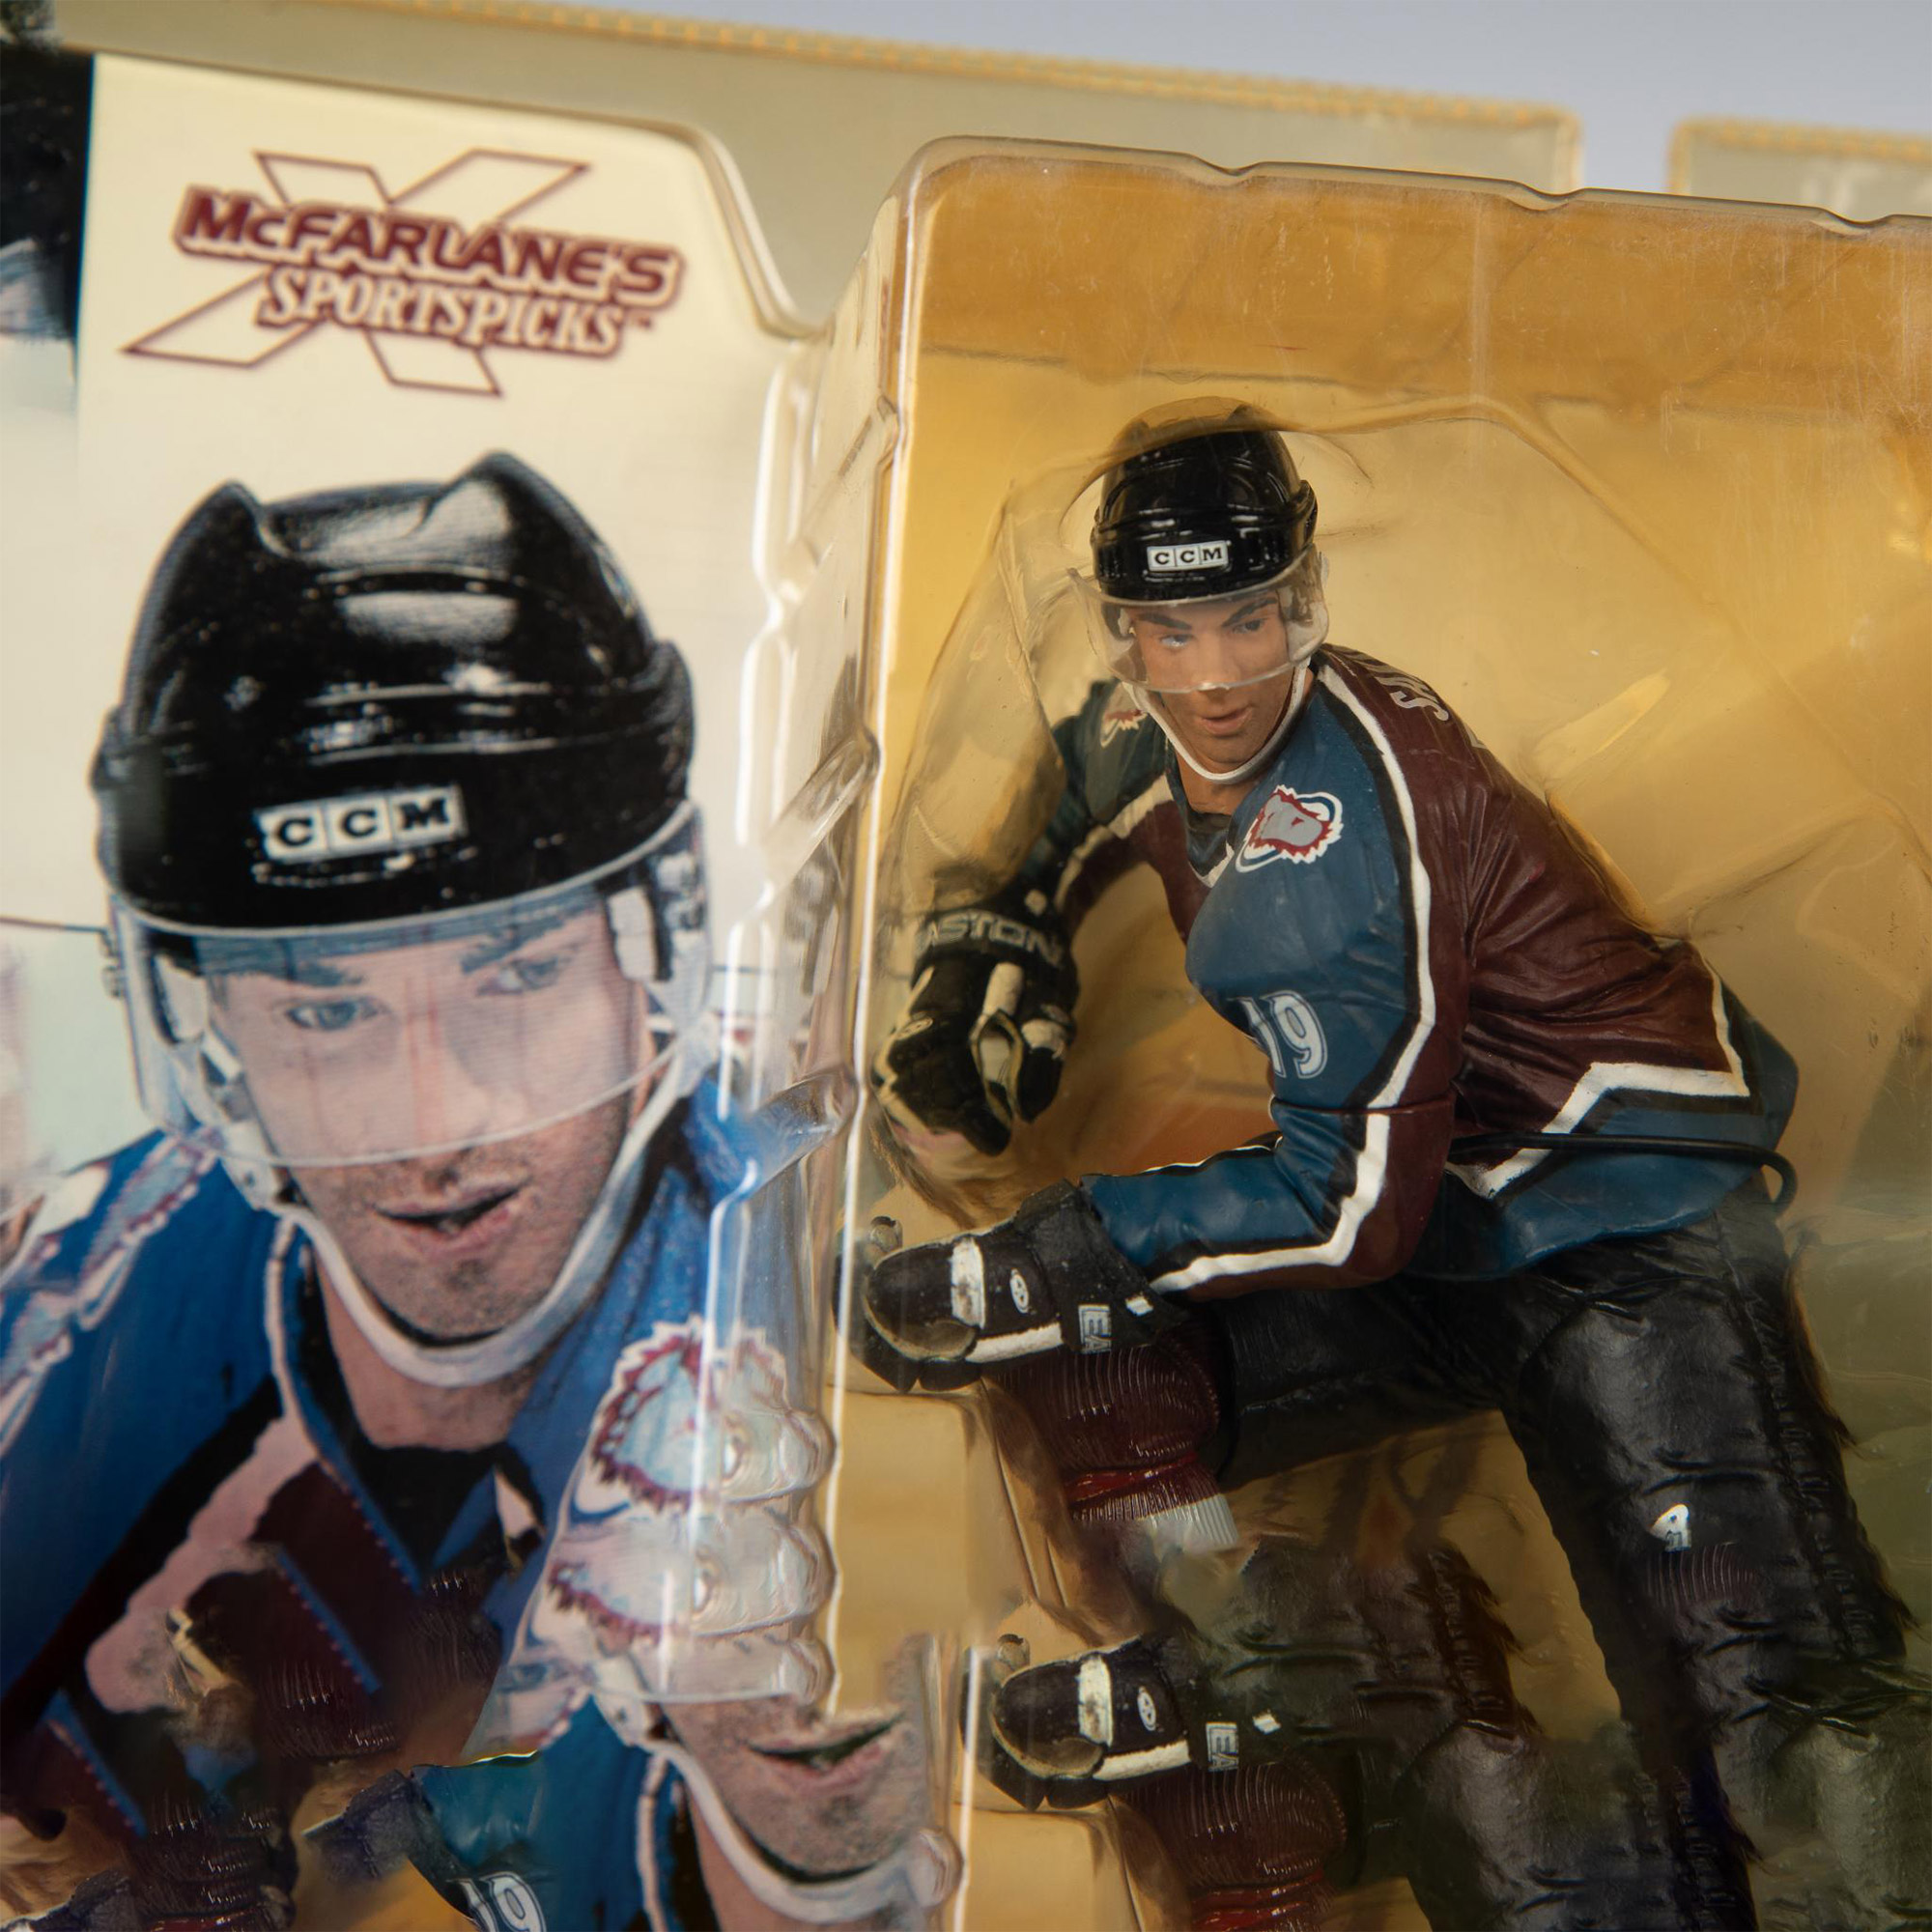 3pc McFarlane NHL SportsPicks & NHL Legends Figurines - Image 5 of 5